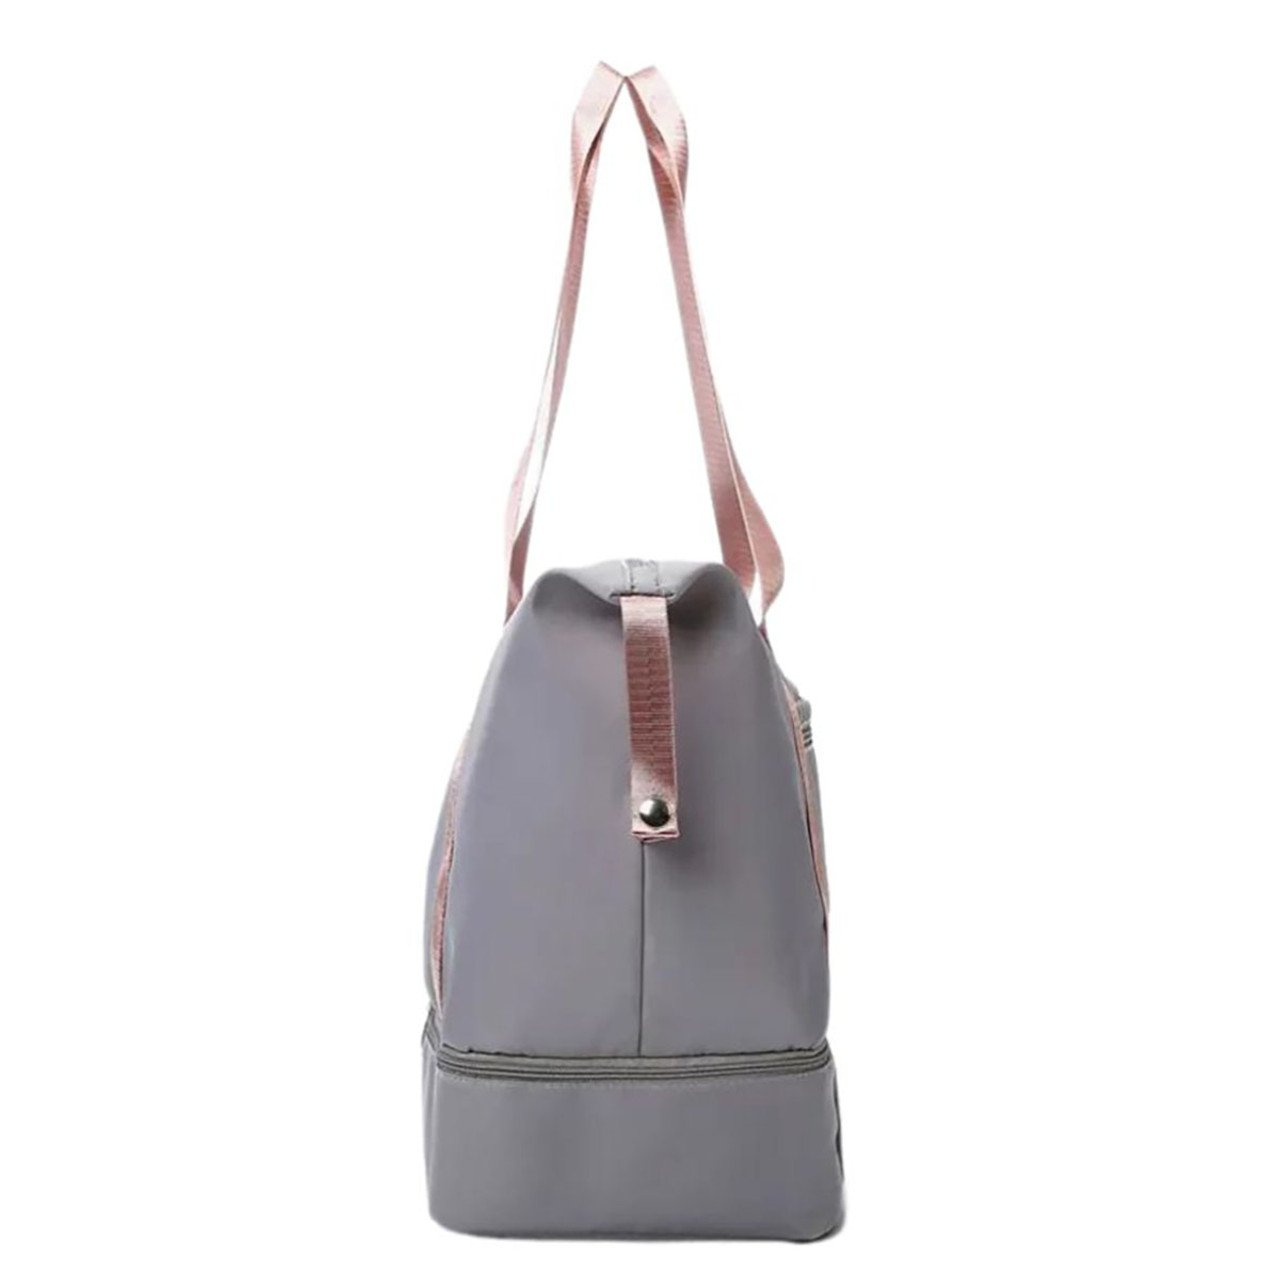 Tessa Travel Duffle Bag product image